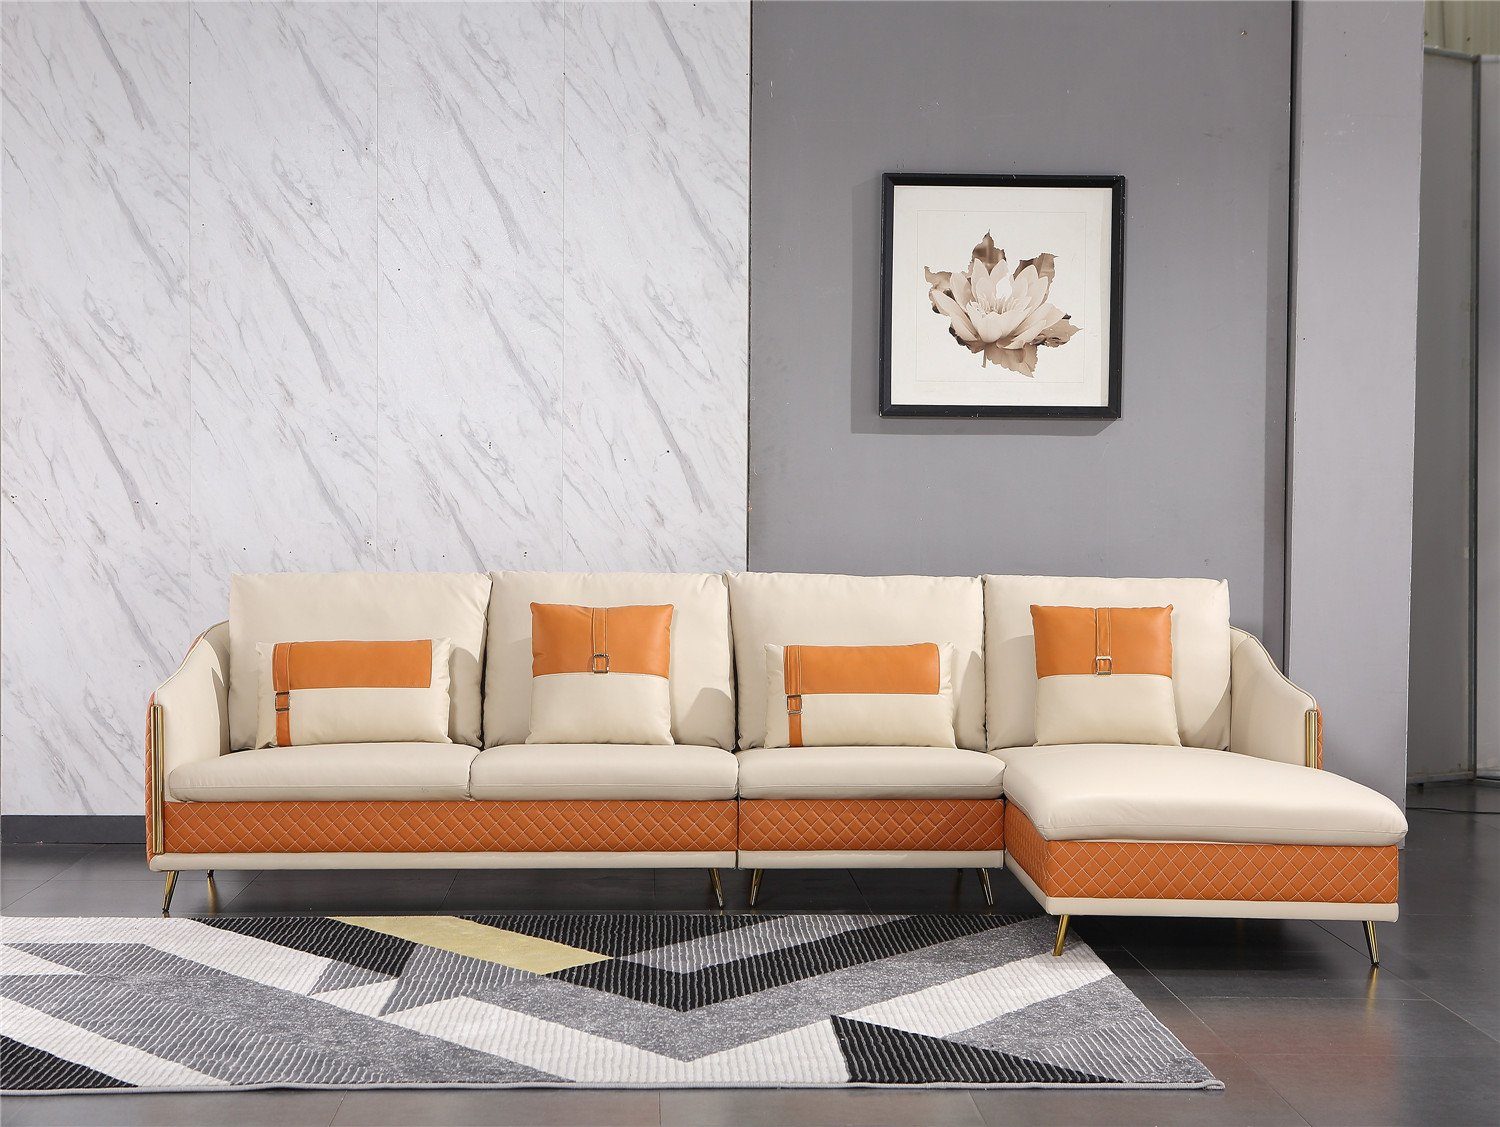 JVmoebel Ecksofa Couch Ecksofa Leder Wohnlandschaft Garnitur Design Modern, Made in Europe Orange